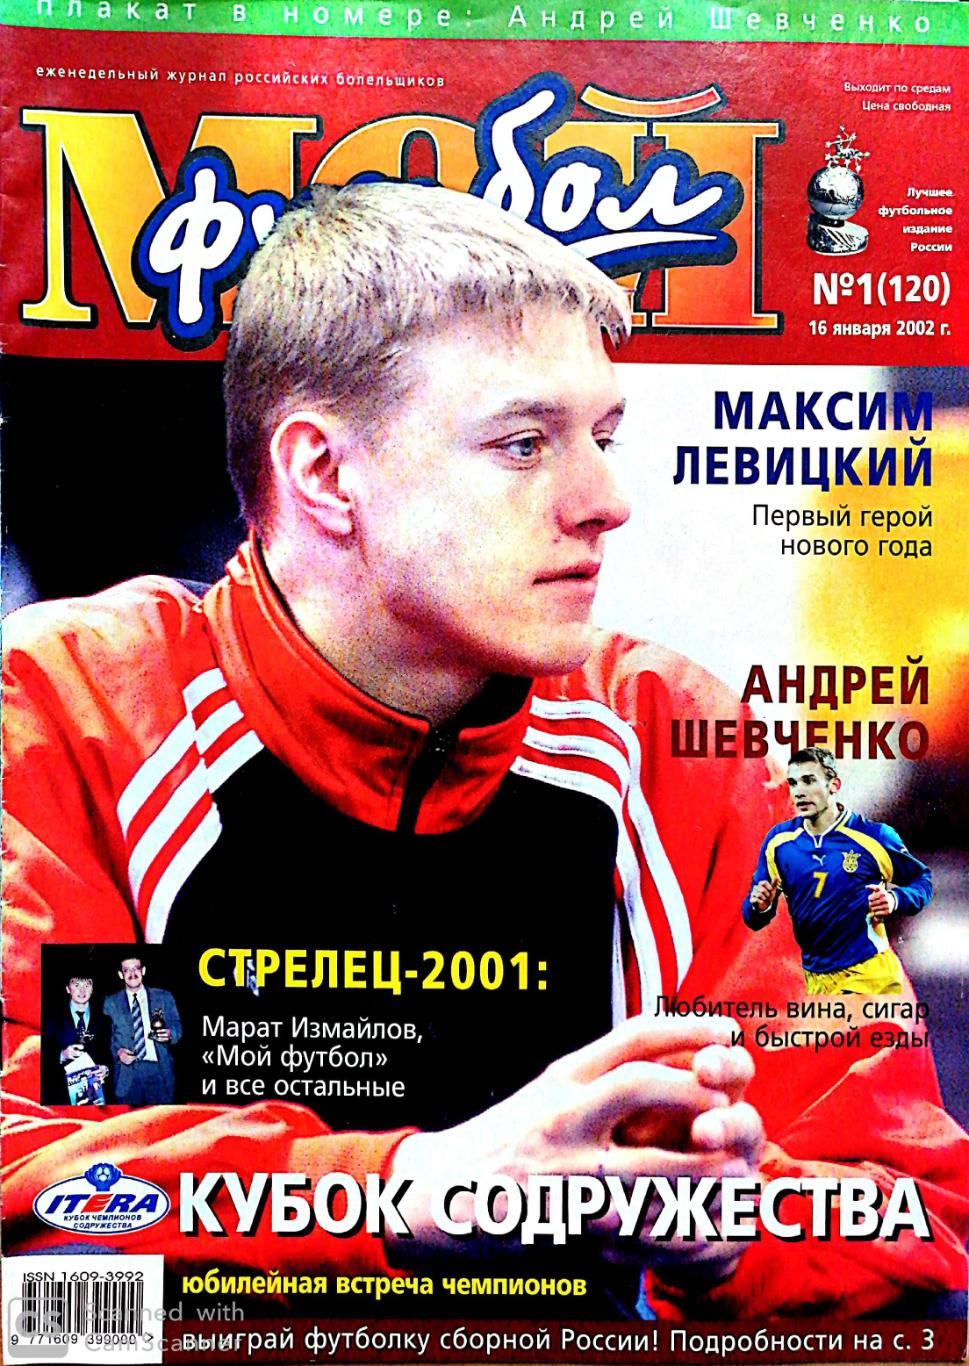 Журнал Мой футбол (Москва). #1. 16.01.2002+постер Шевченко